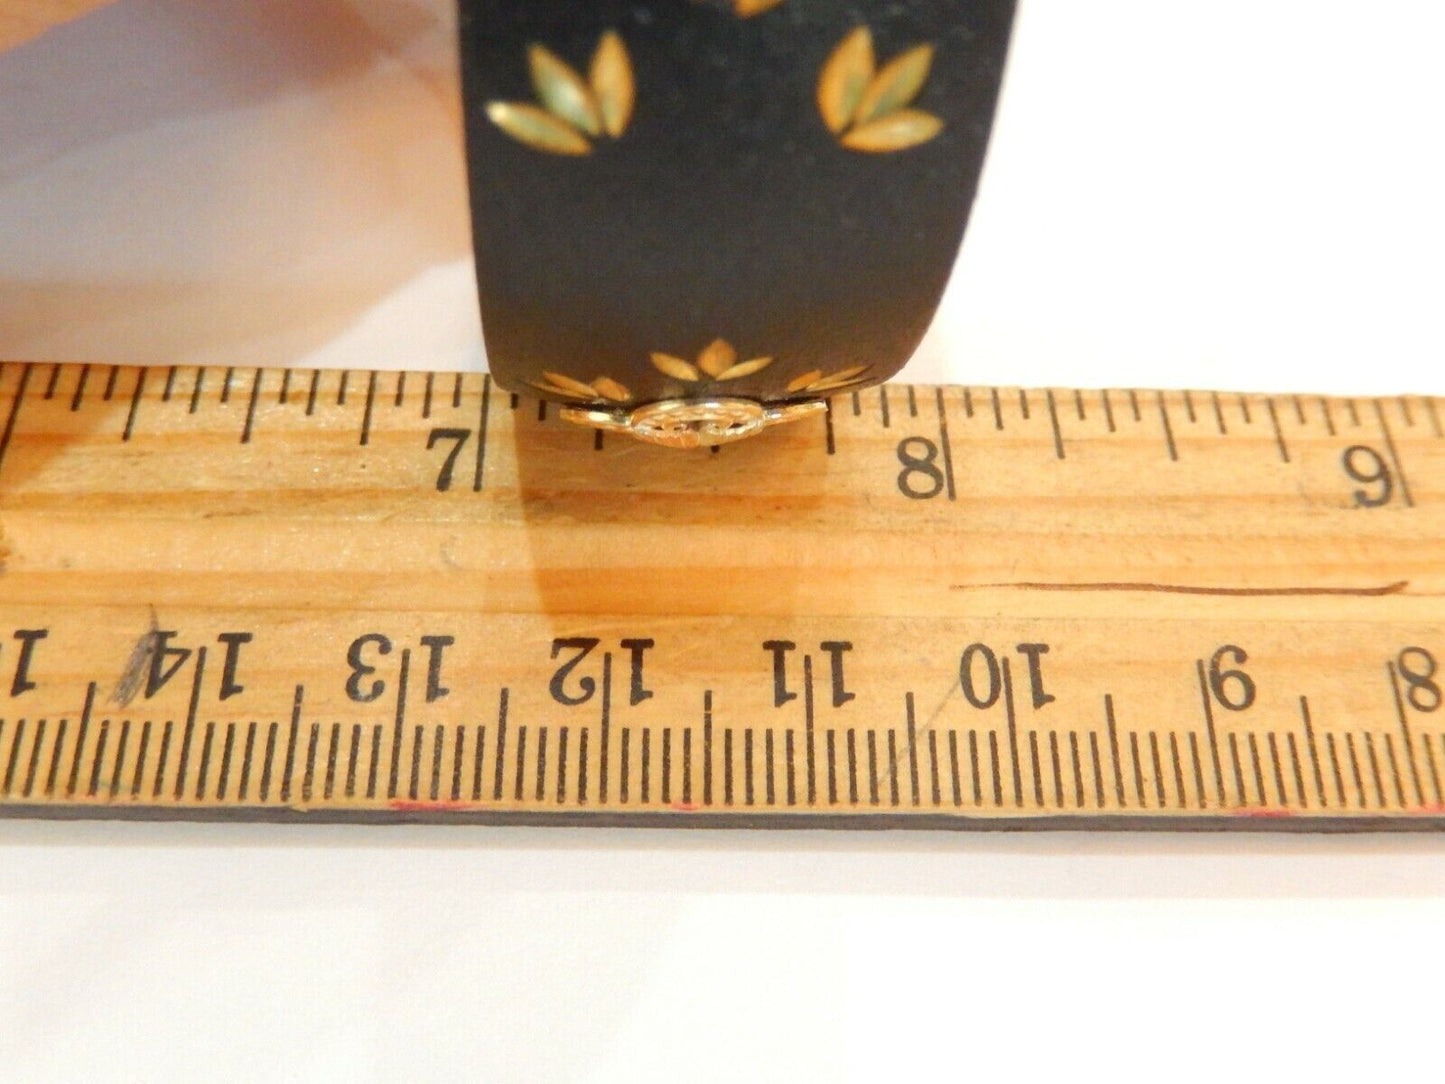 *NEW* 14K Solid  Tri-Color Gold Accents Black Textured Metal Bangle Bracelet